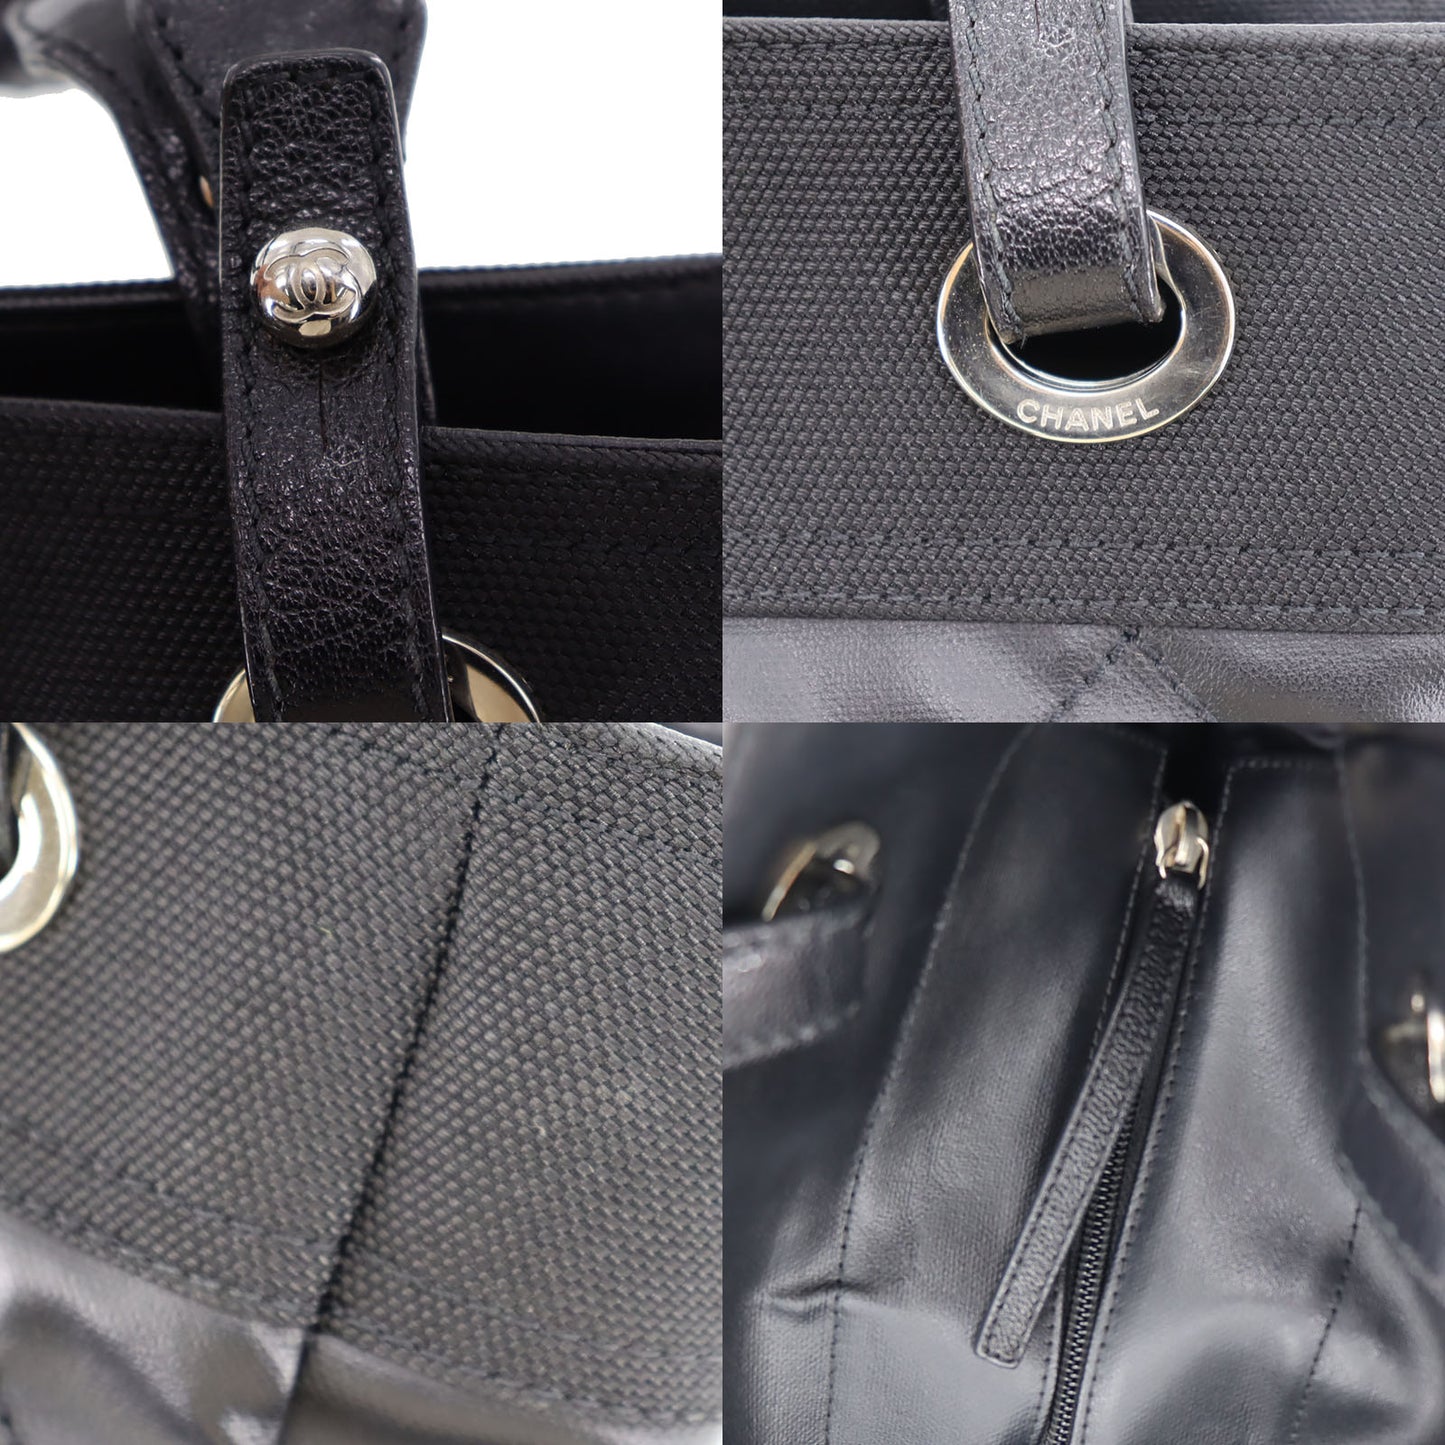 CHANEL Paris Biarritz Handbag Black Leather Italy Vintage #BO252